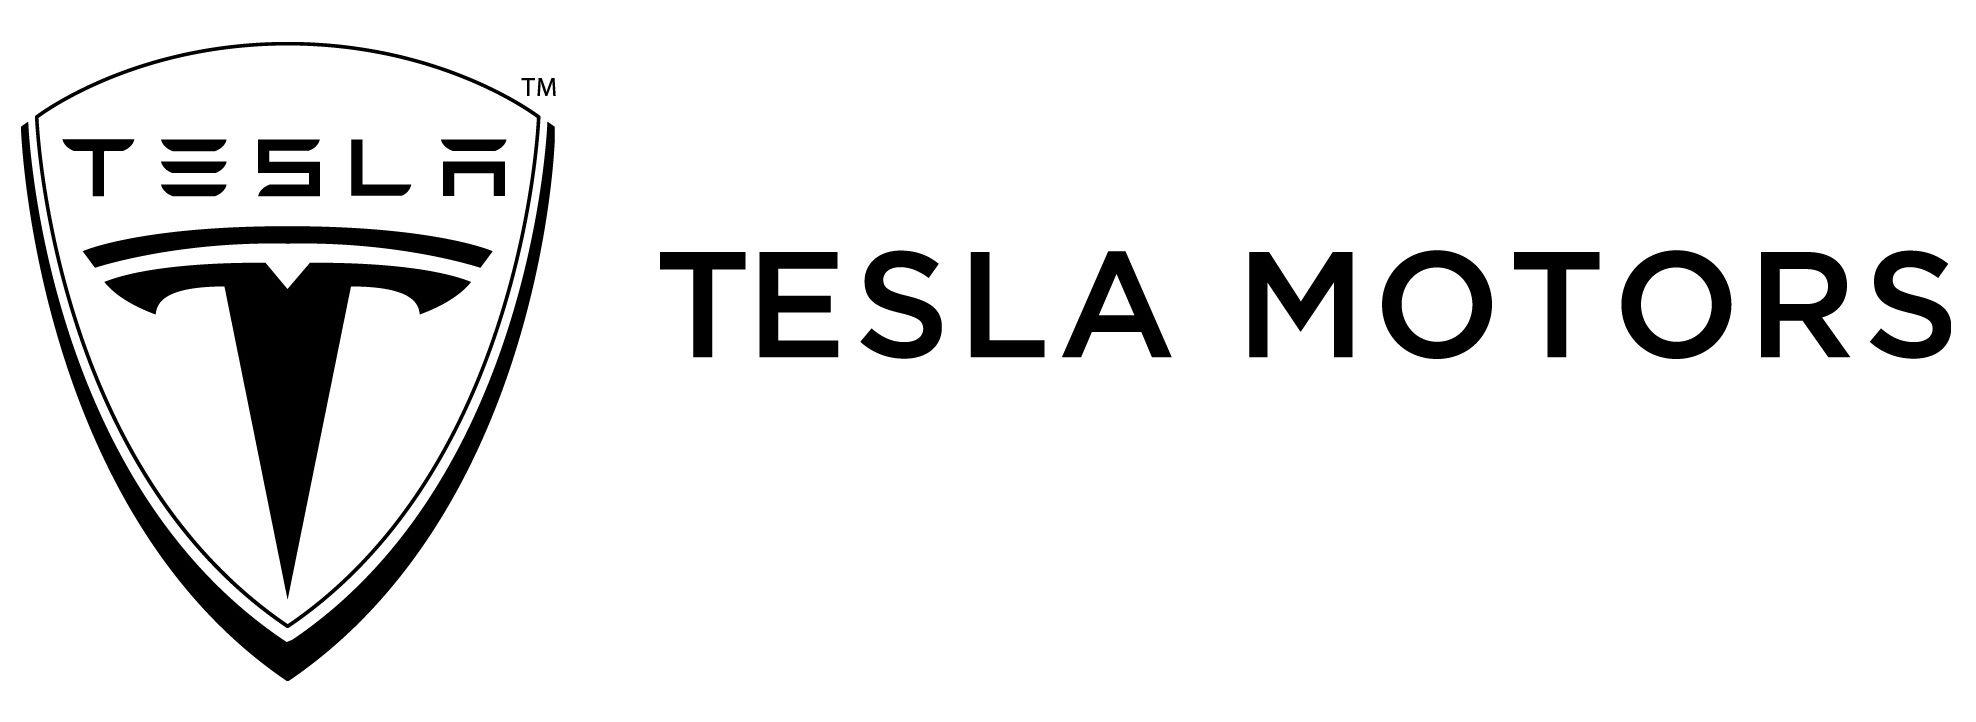 Tesla Official Logo - Tesla Motors | Cartype